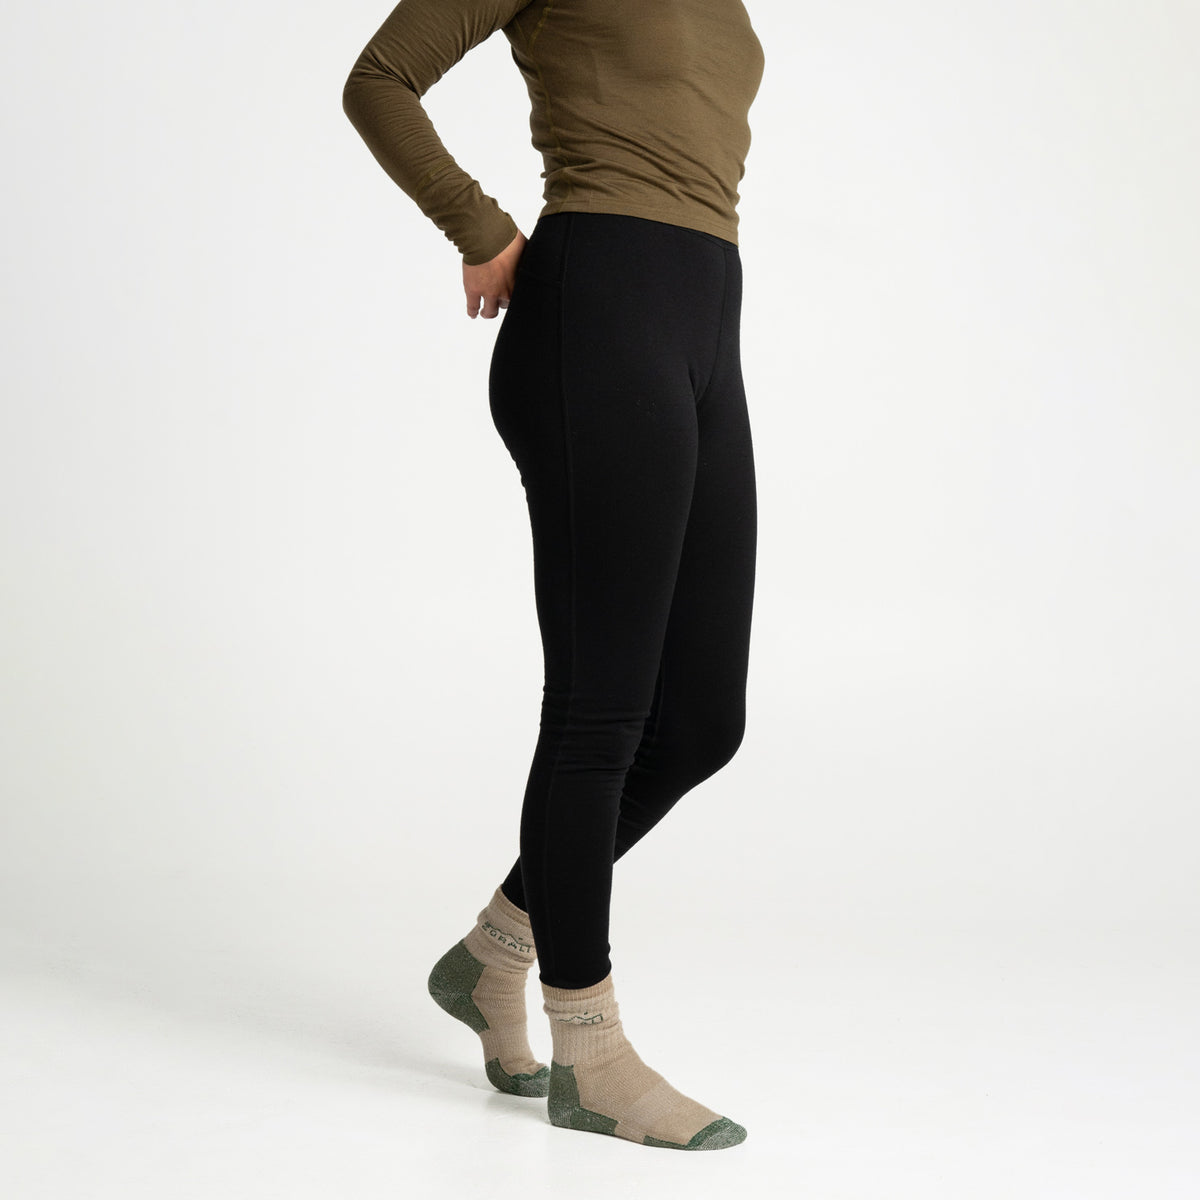 Buy Black Rib Fleece Leggings from Next New Zealand